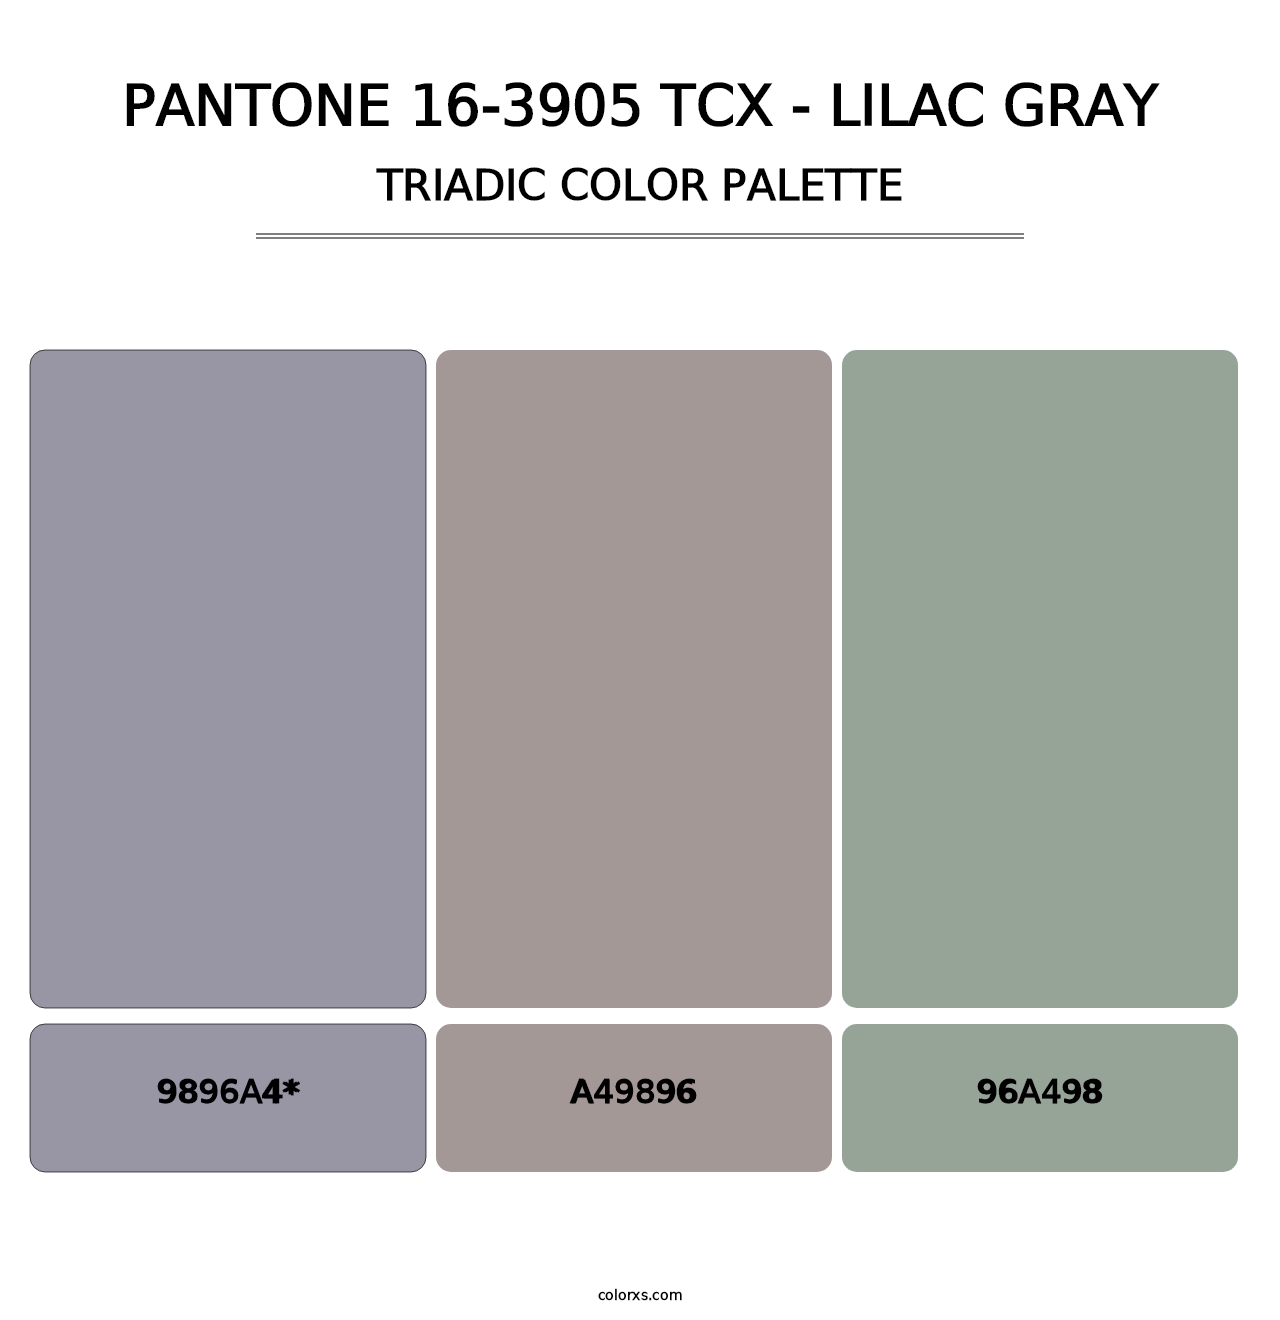 PANTONE 16-3905 TCX - Lilac Gray - Triadic Color Palette